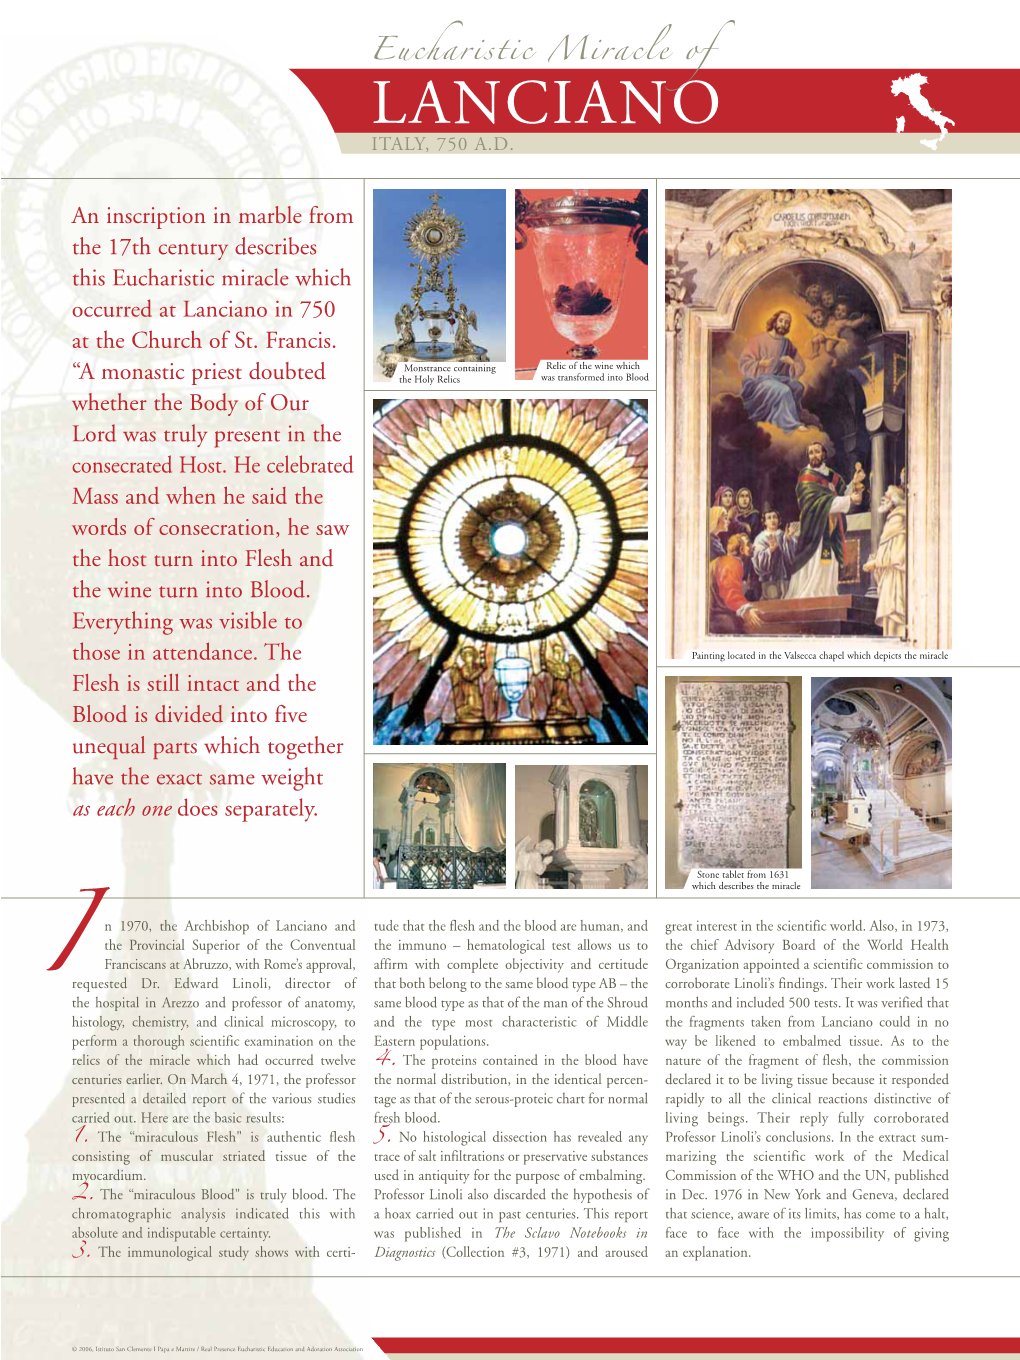 Eucharistic Miracle of Lanciano, Italy